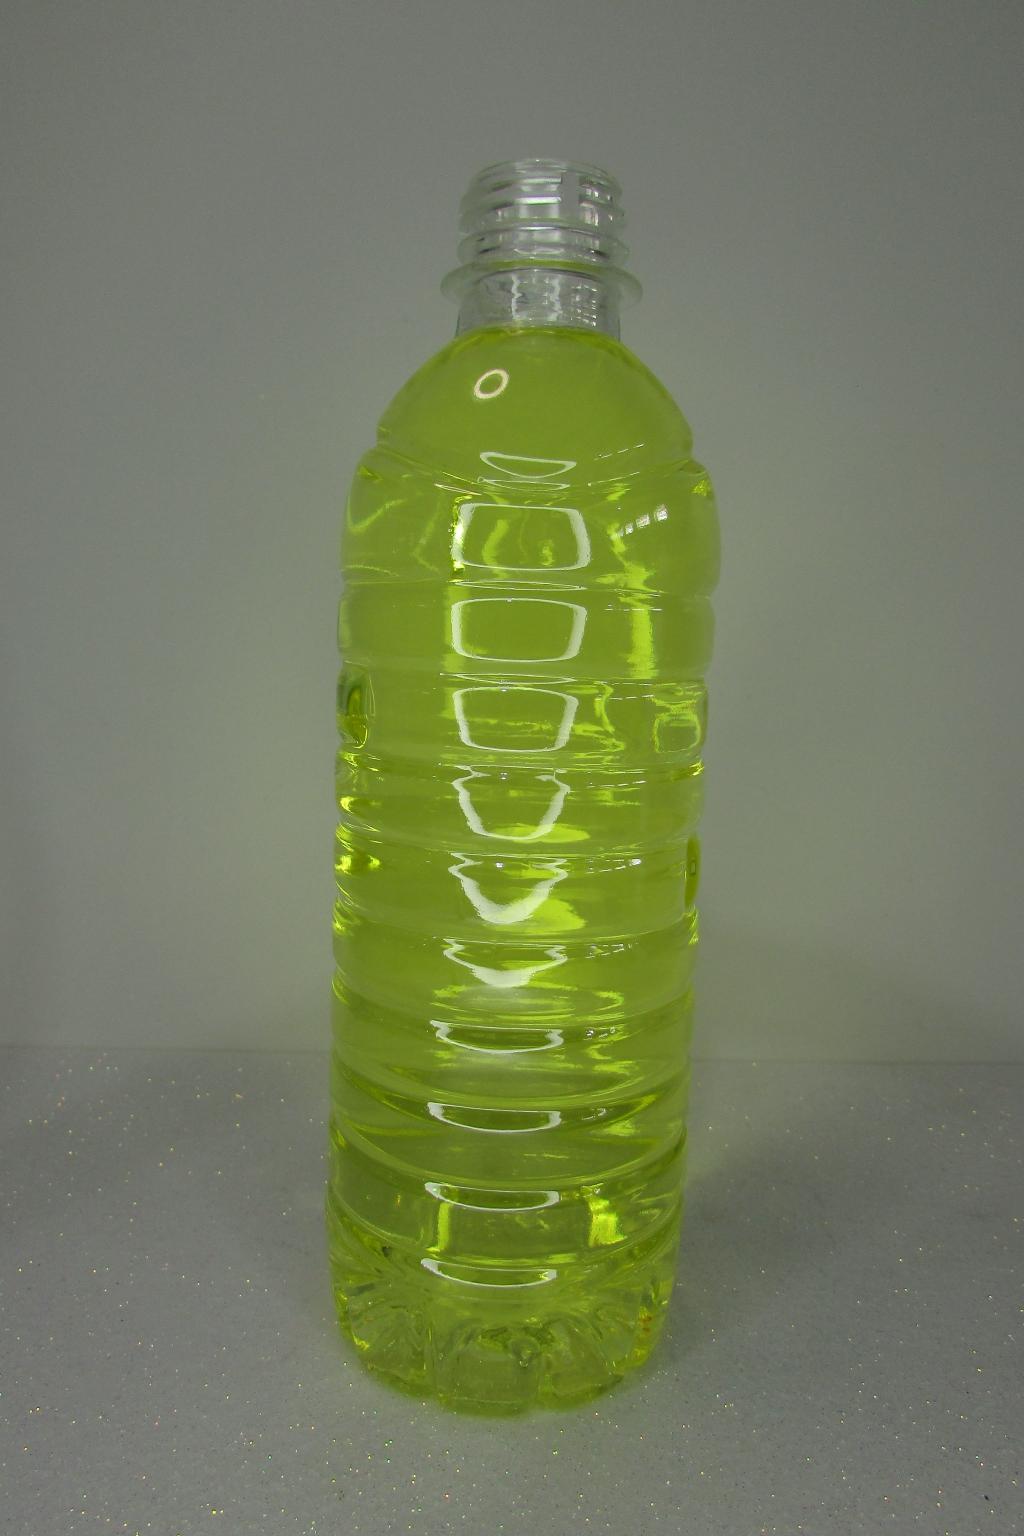 garrafa plástica 500ml transparente